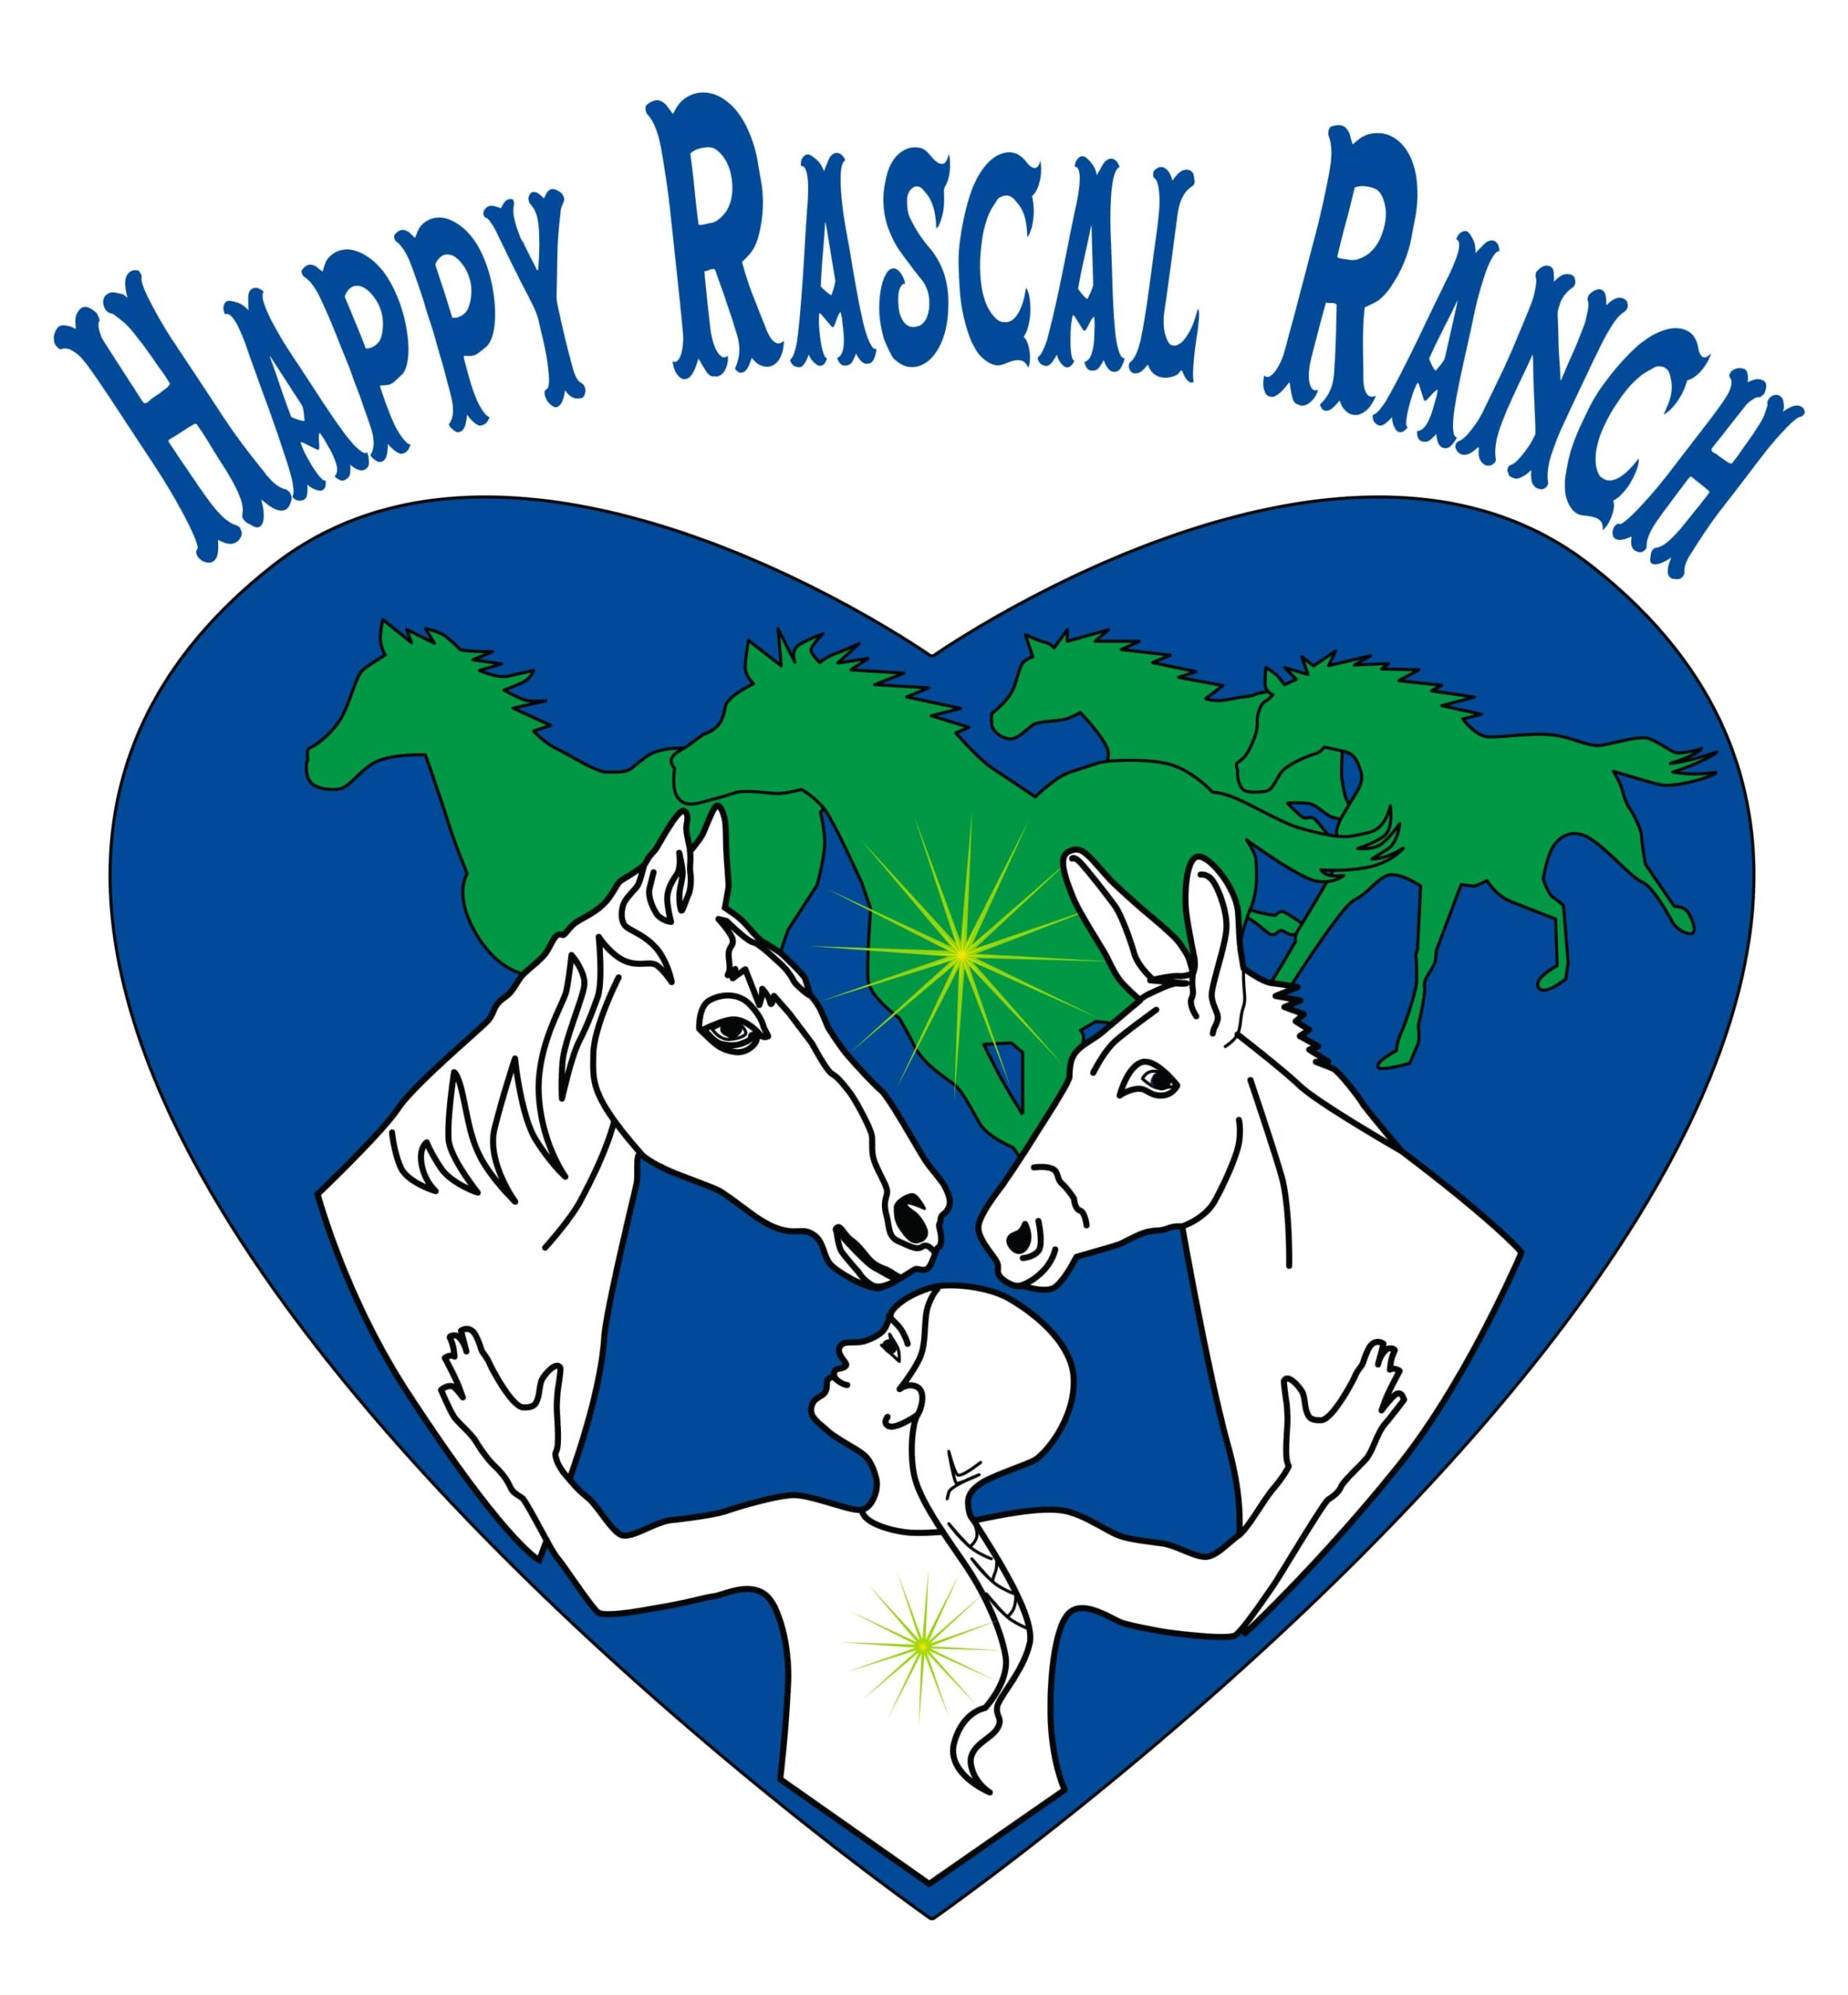 Happy Rascal Ranch